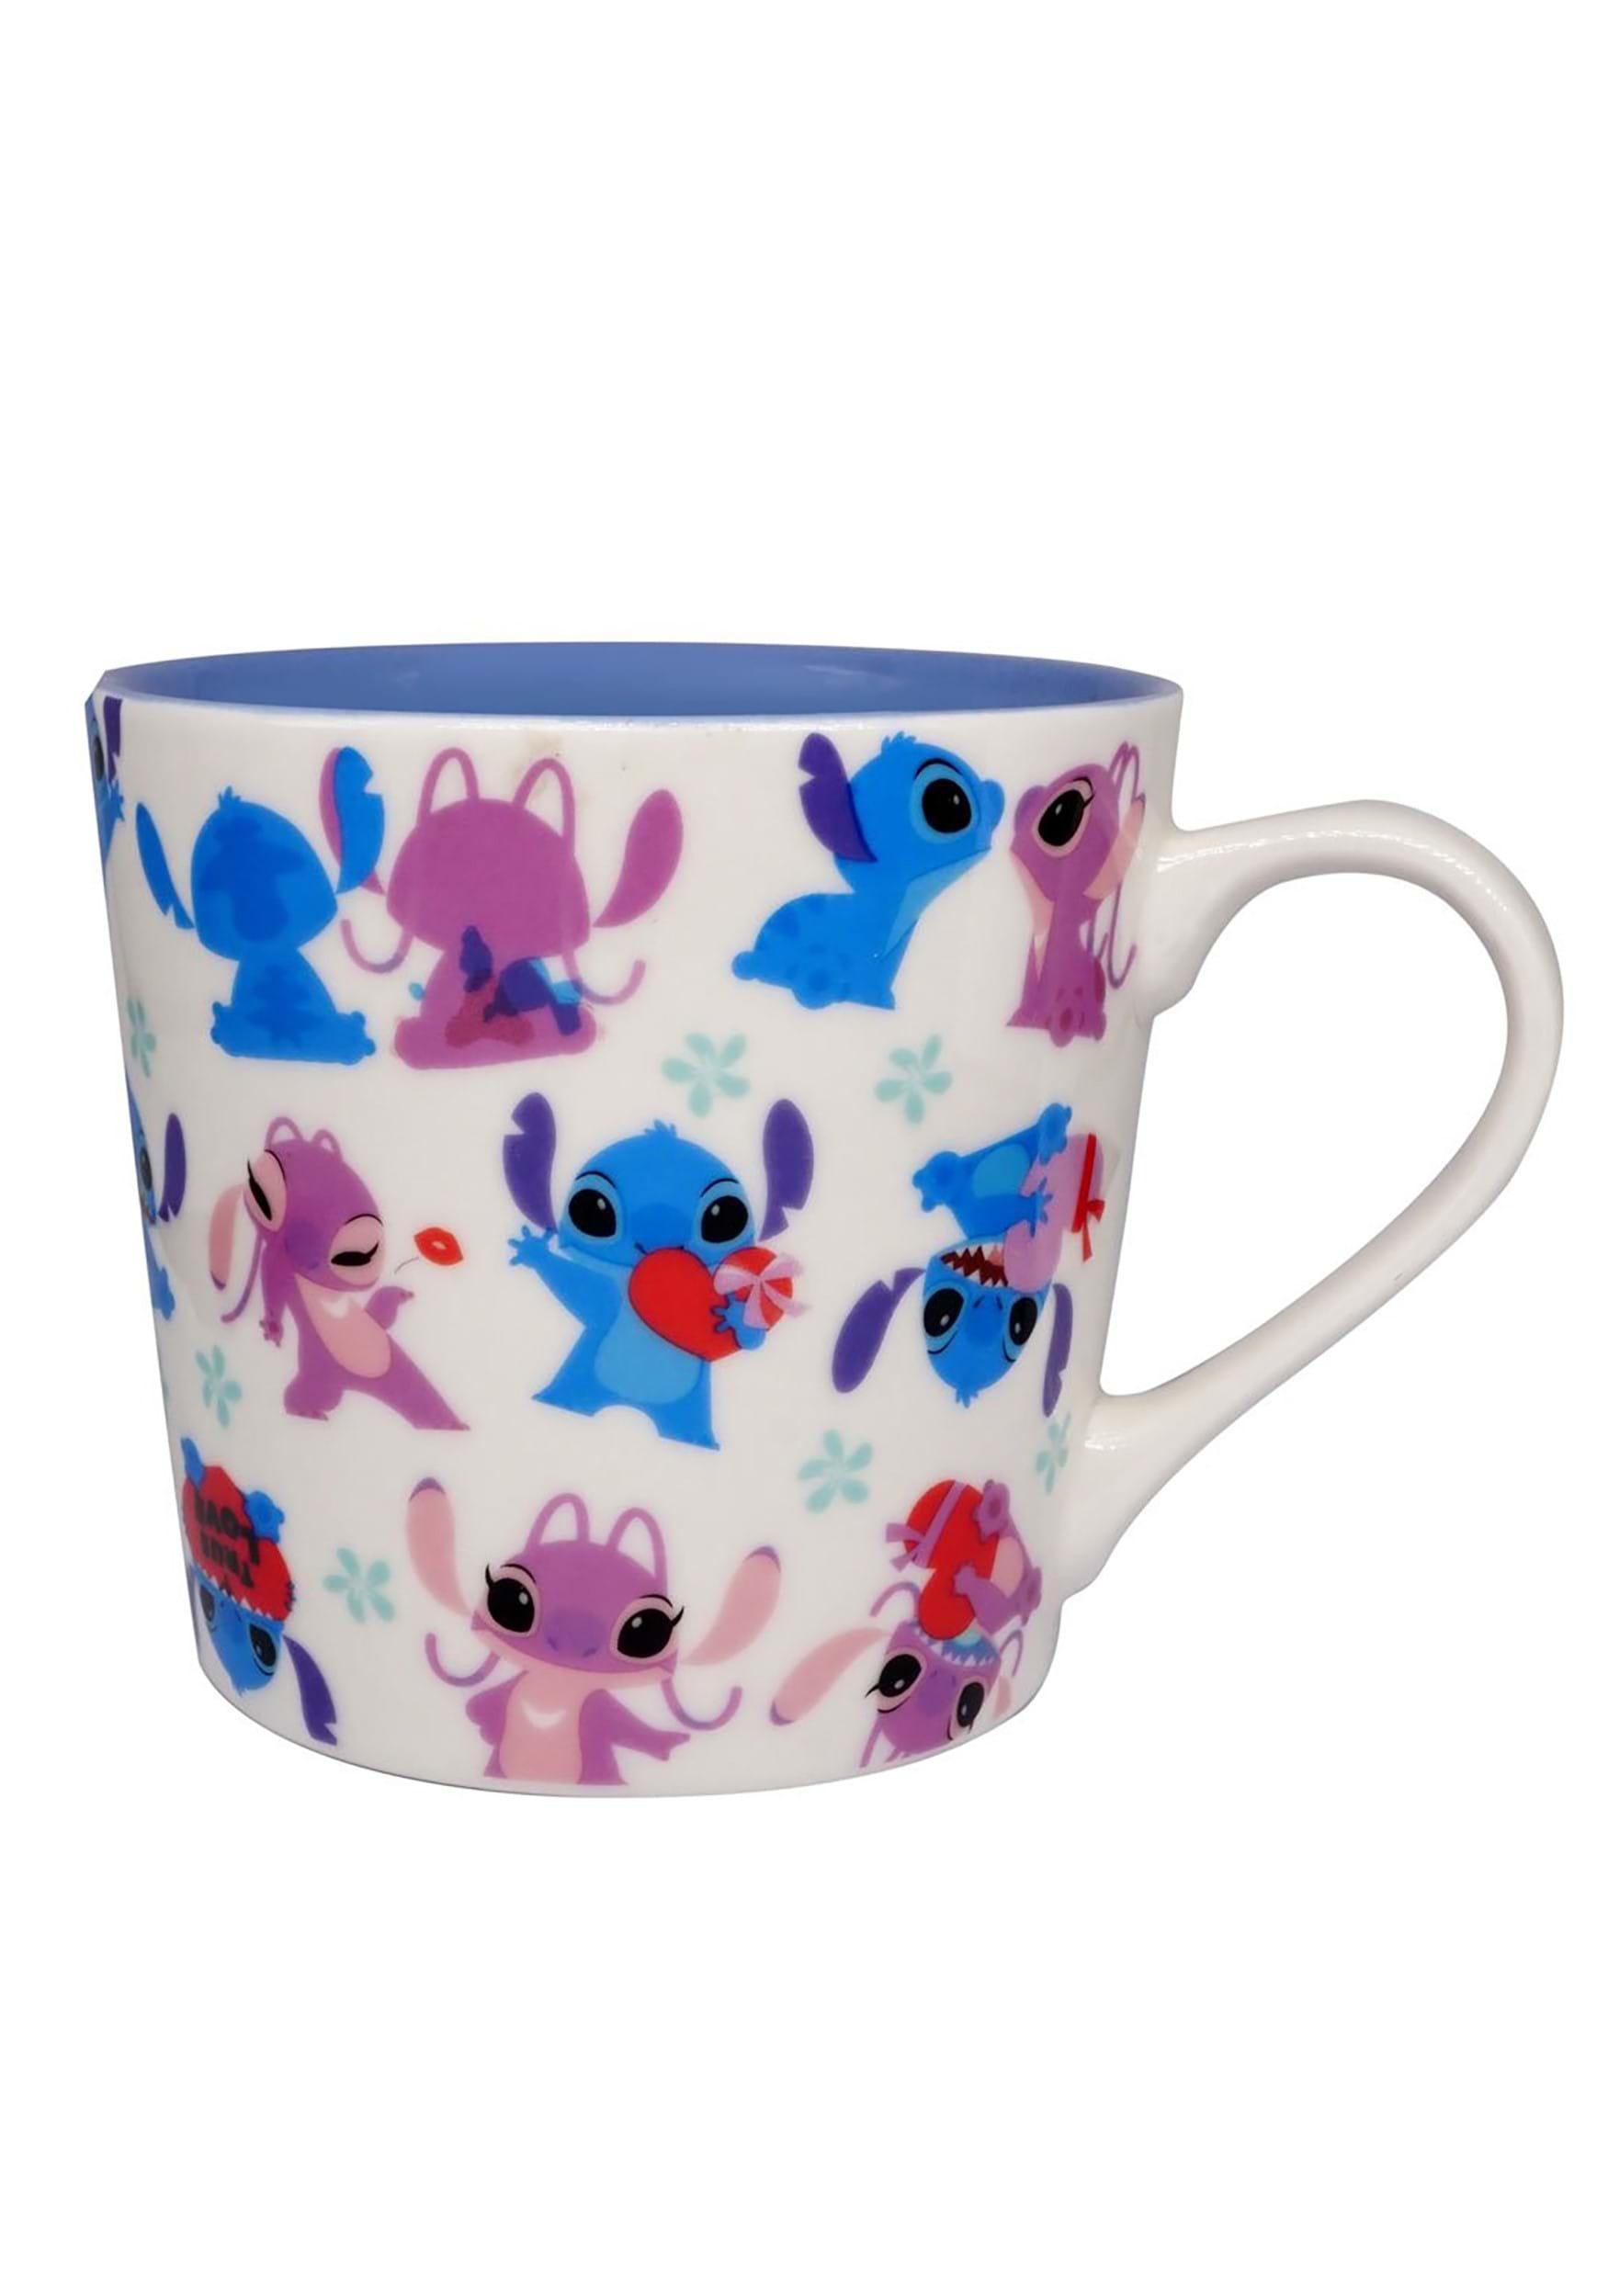 https://images.fun.com/products/85601/1-1/stitch-angel-mug.jpg